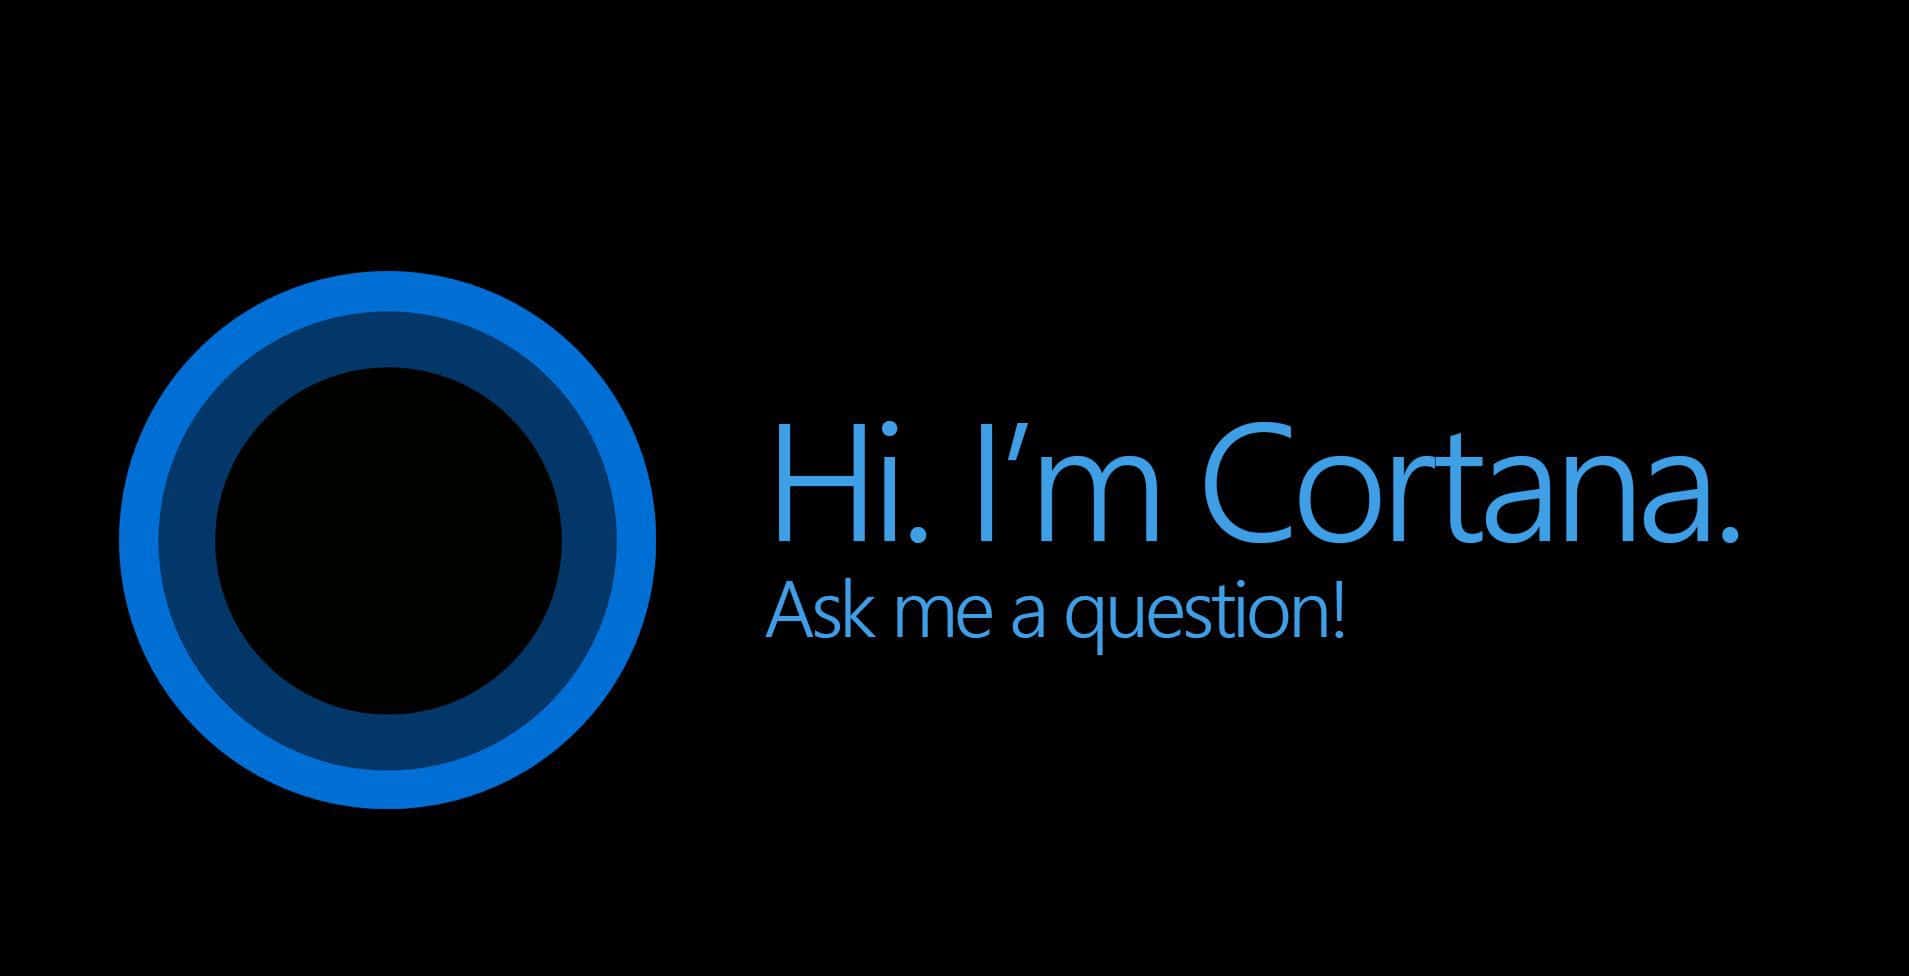 Cortana redstone 4